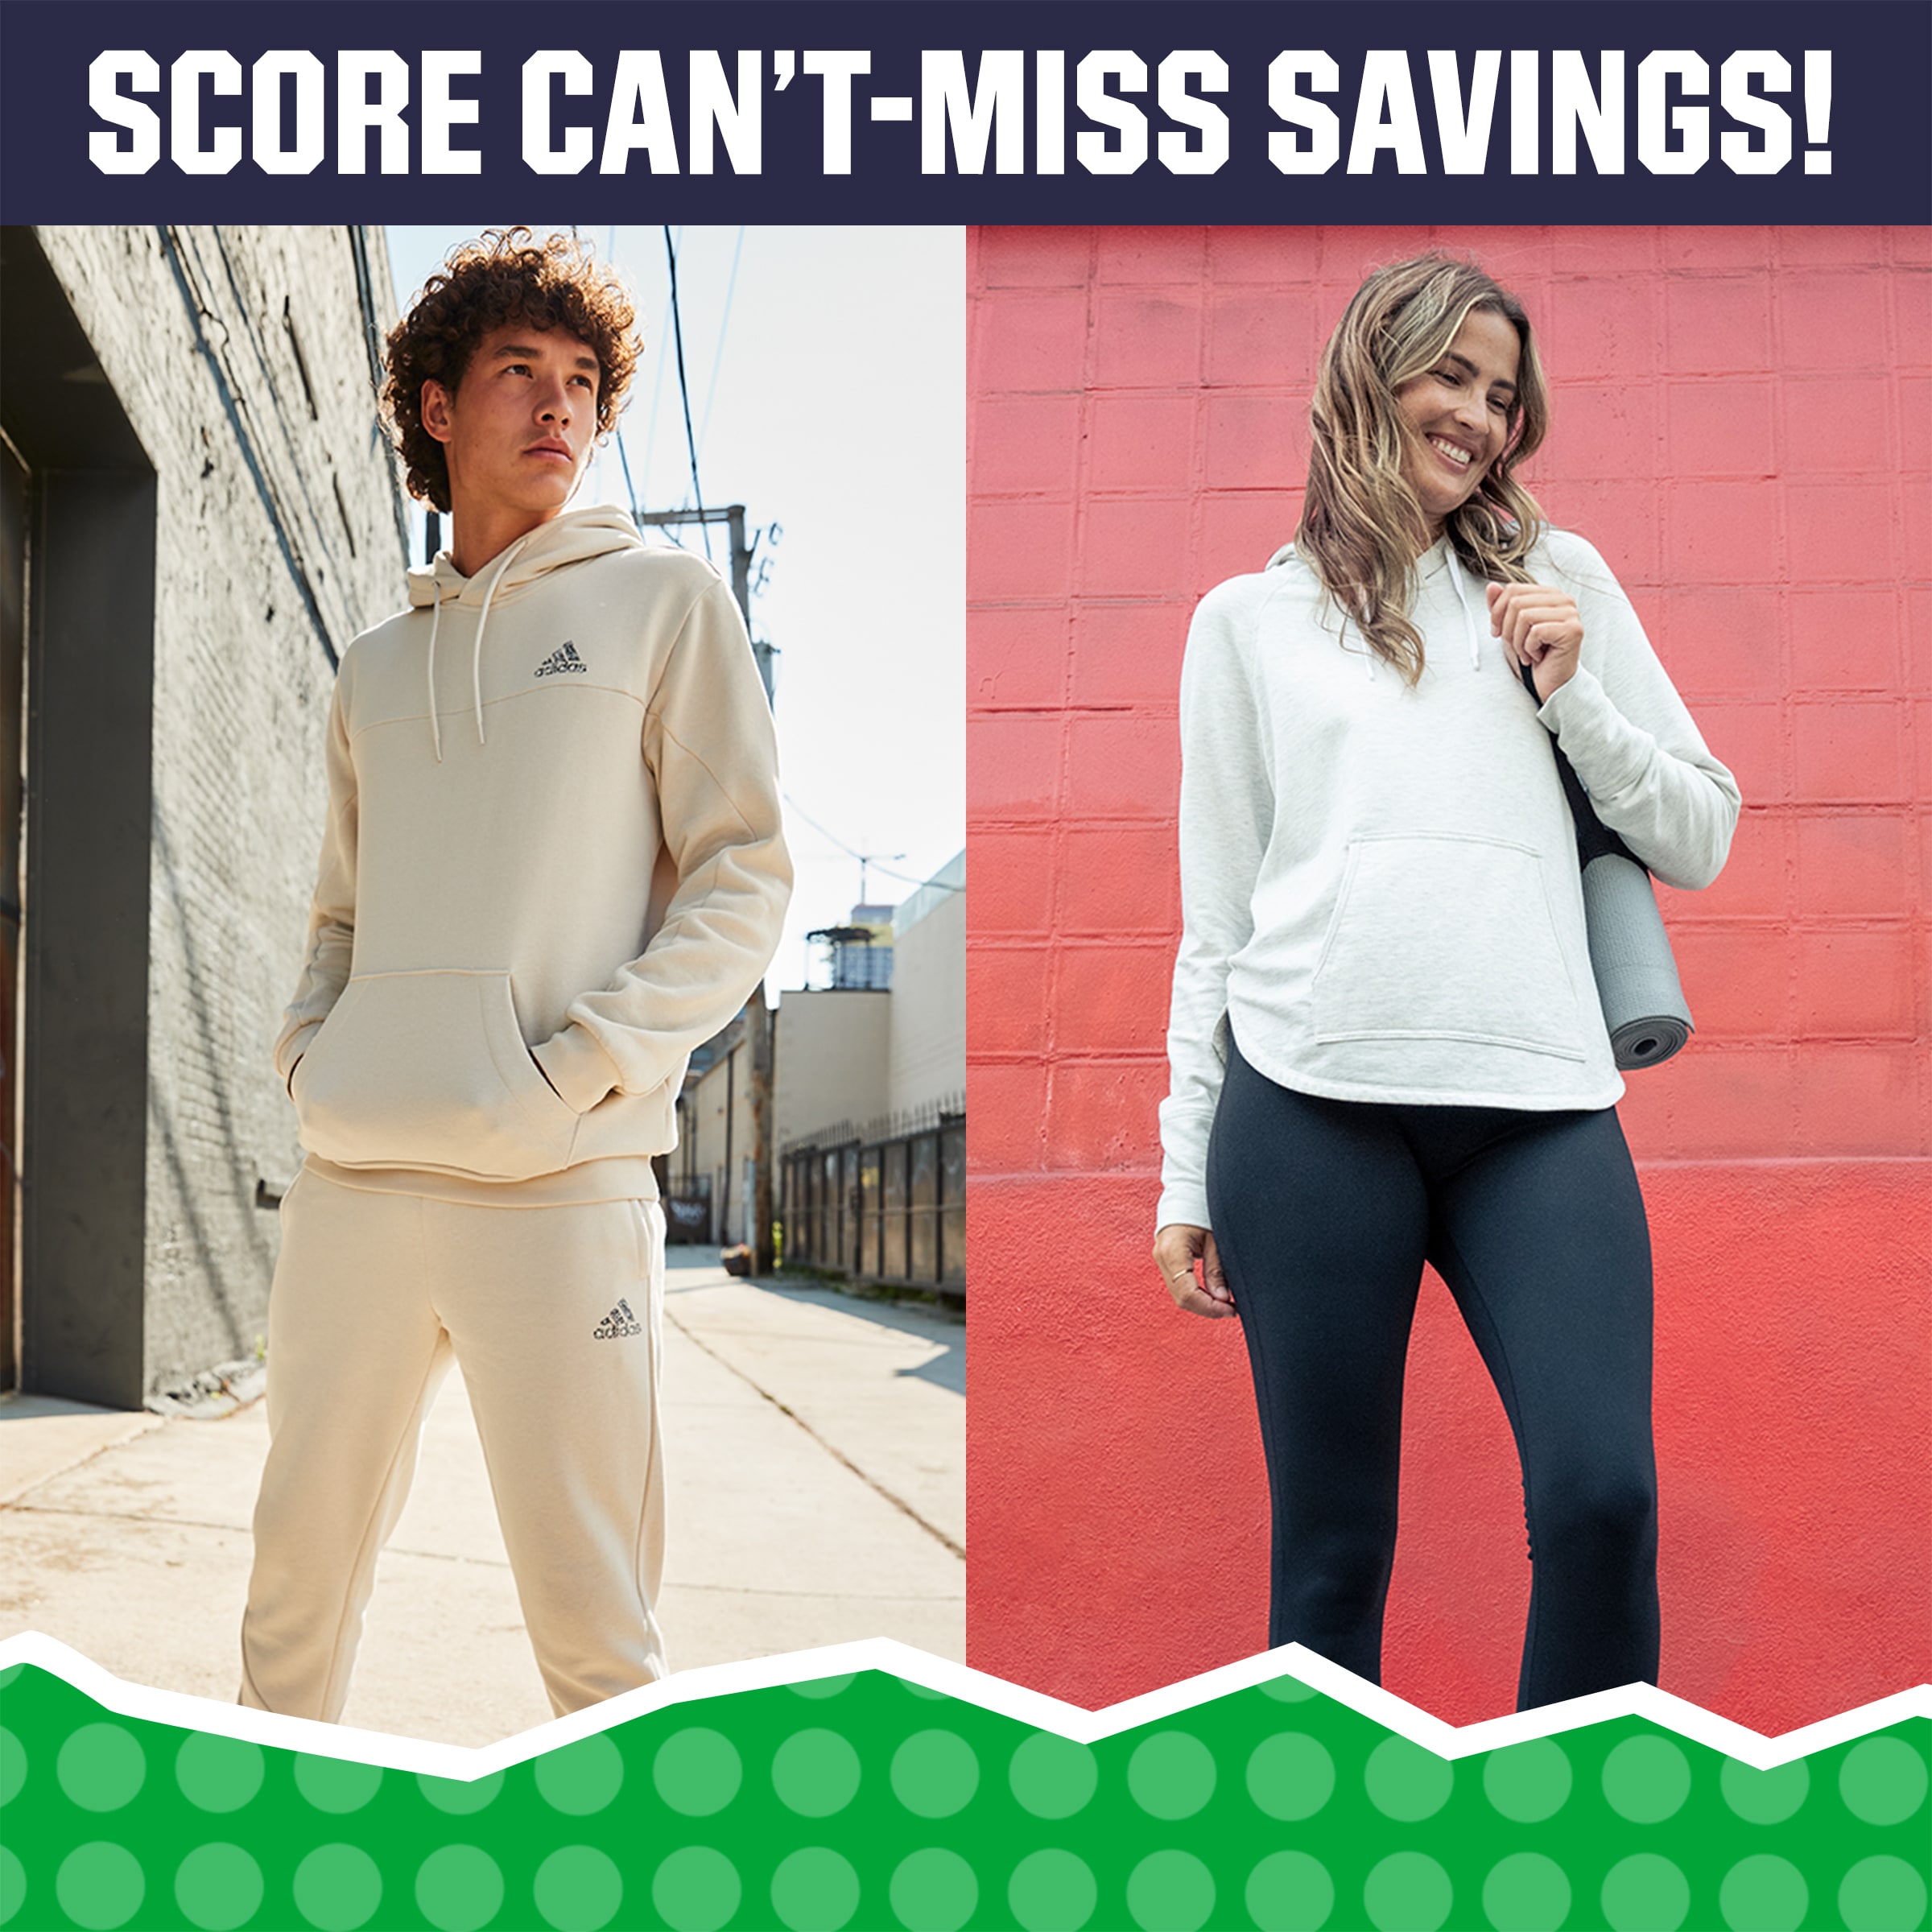 Score can't-miss savings!